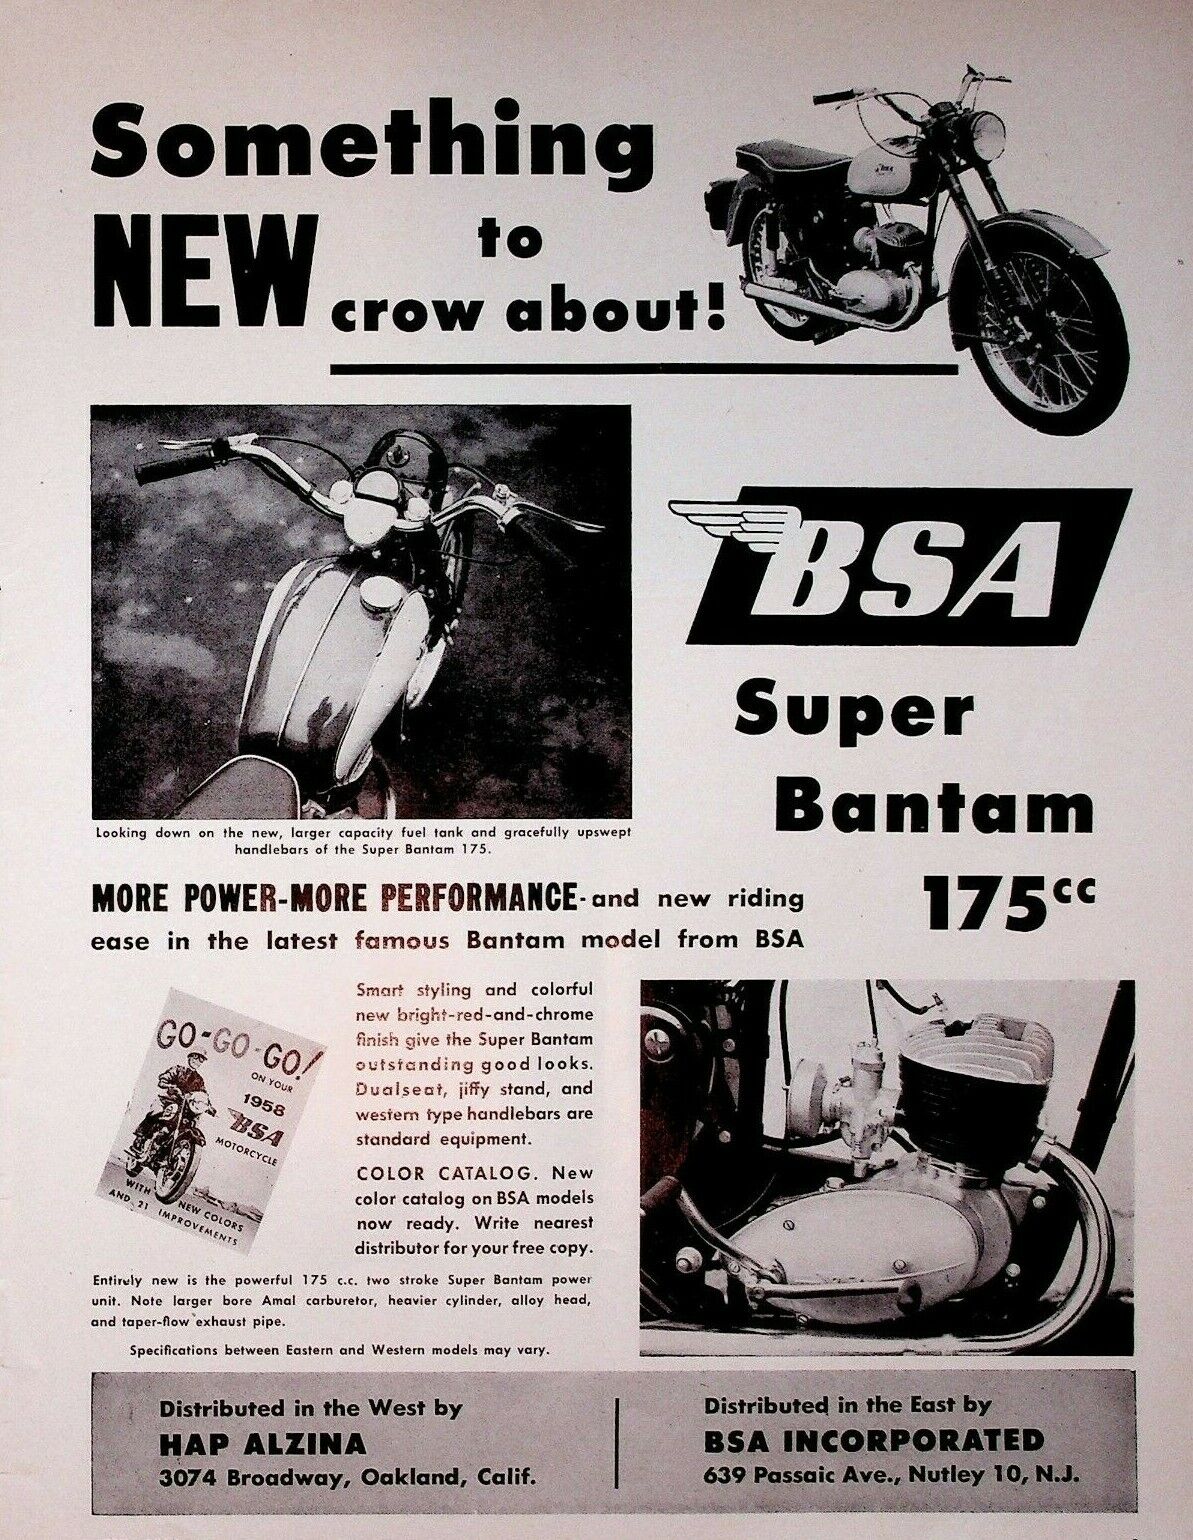 1958 Bsa Super Bantam 175cc - Vintage Motorcycle Ad